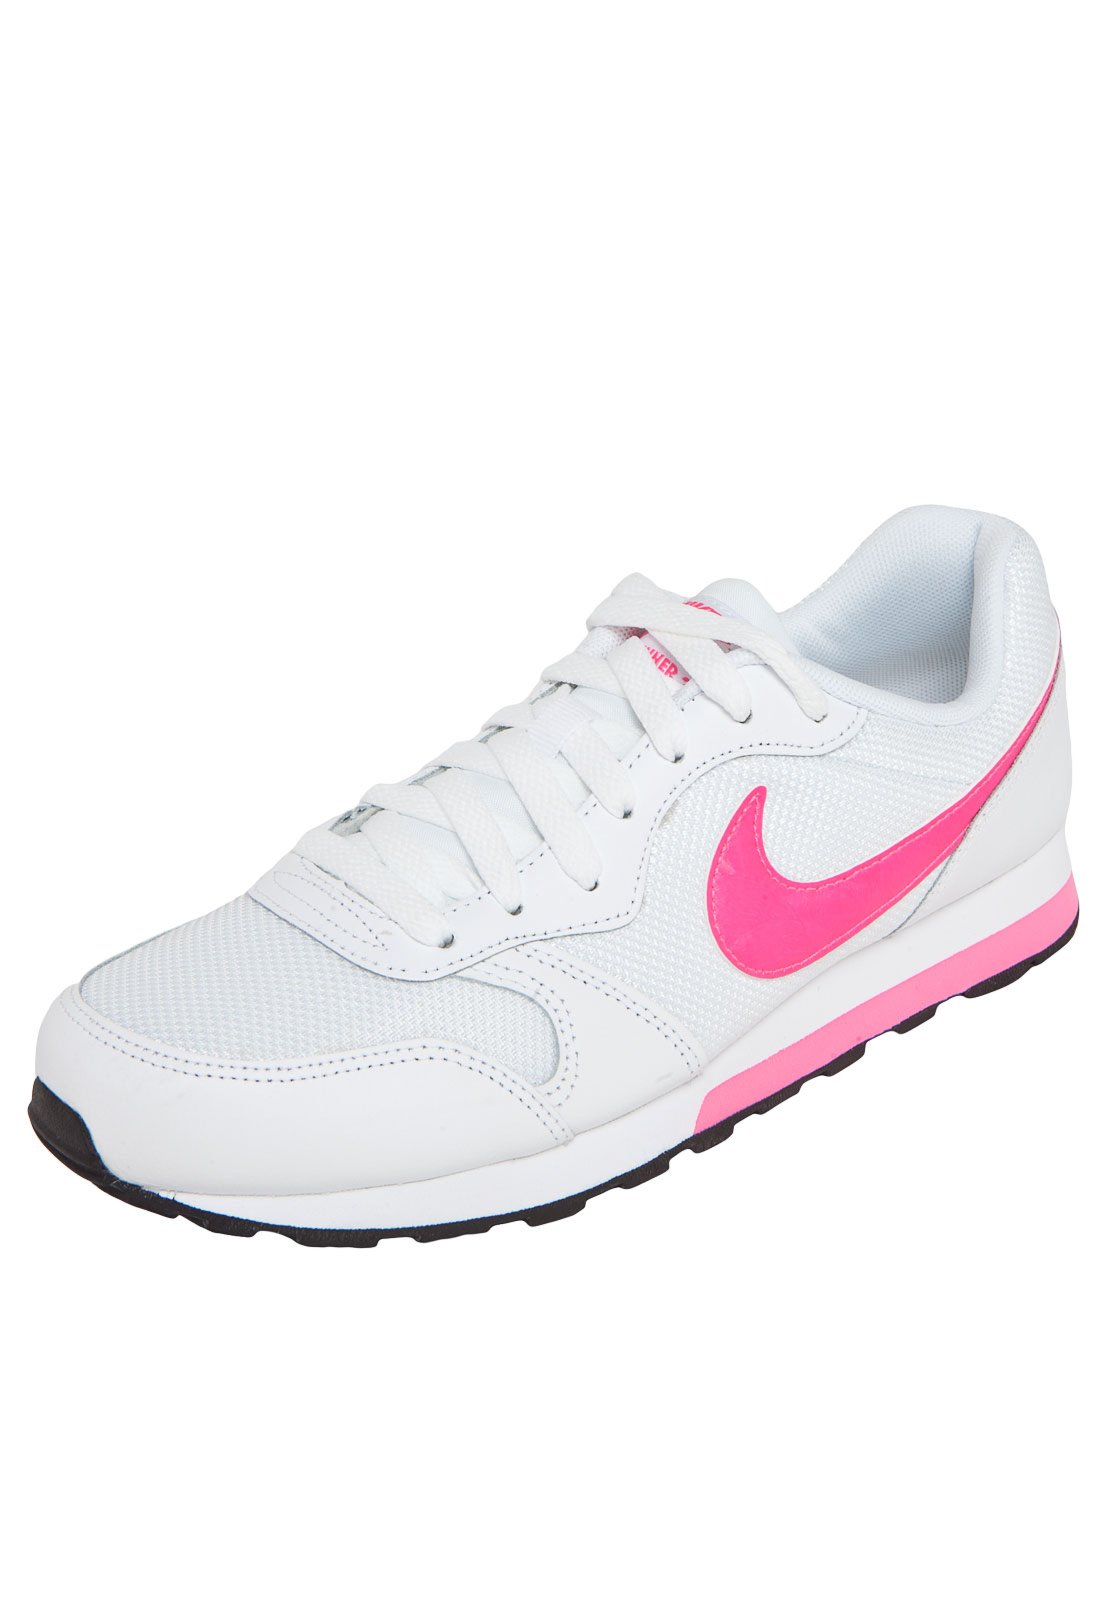 tenis nike branco e rosa feminino